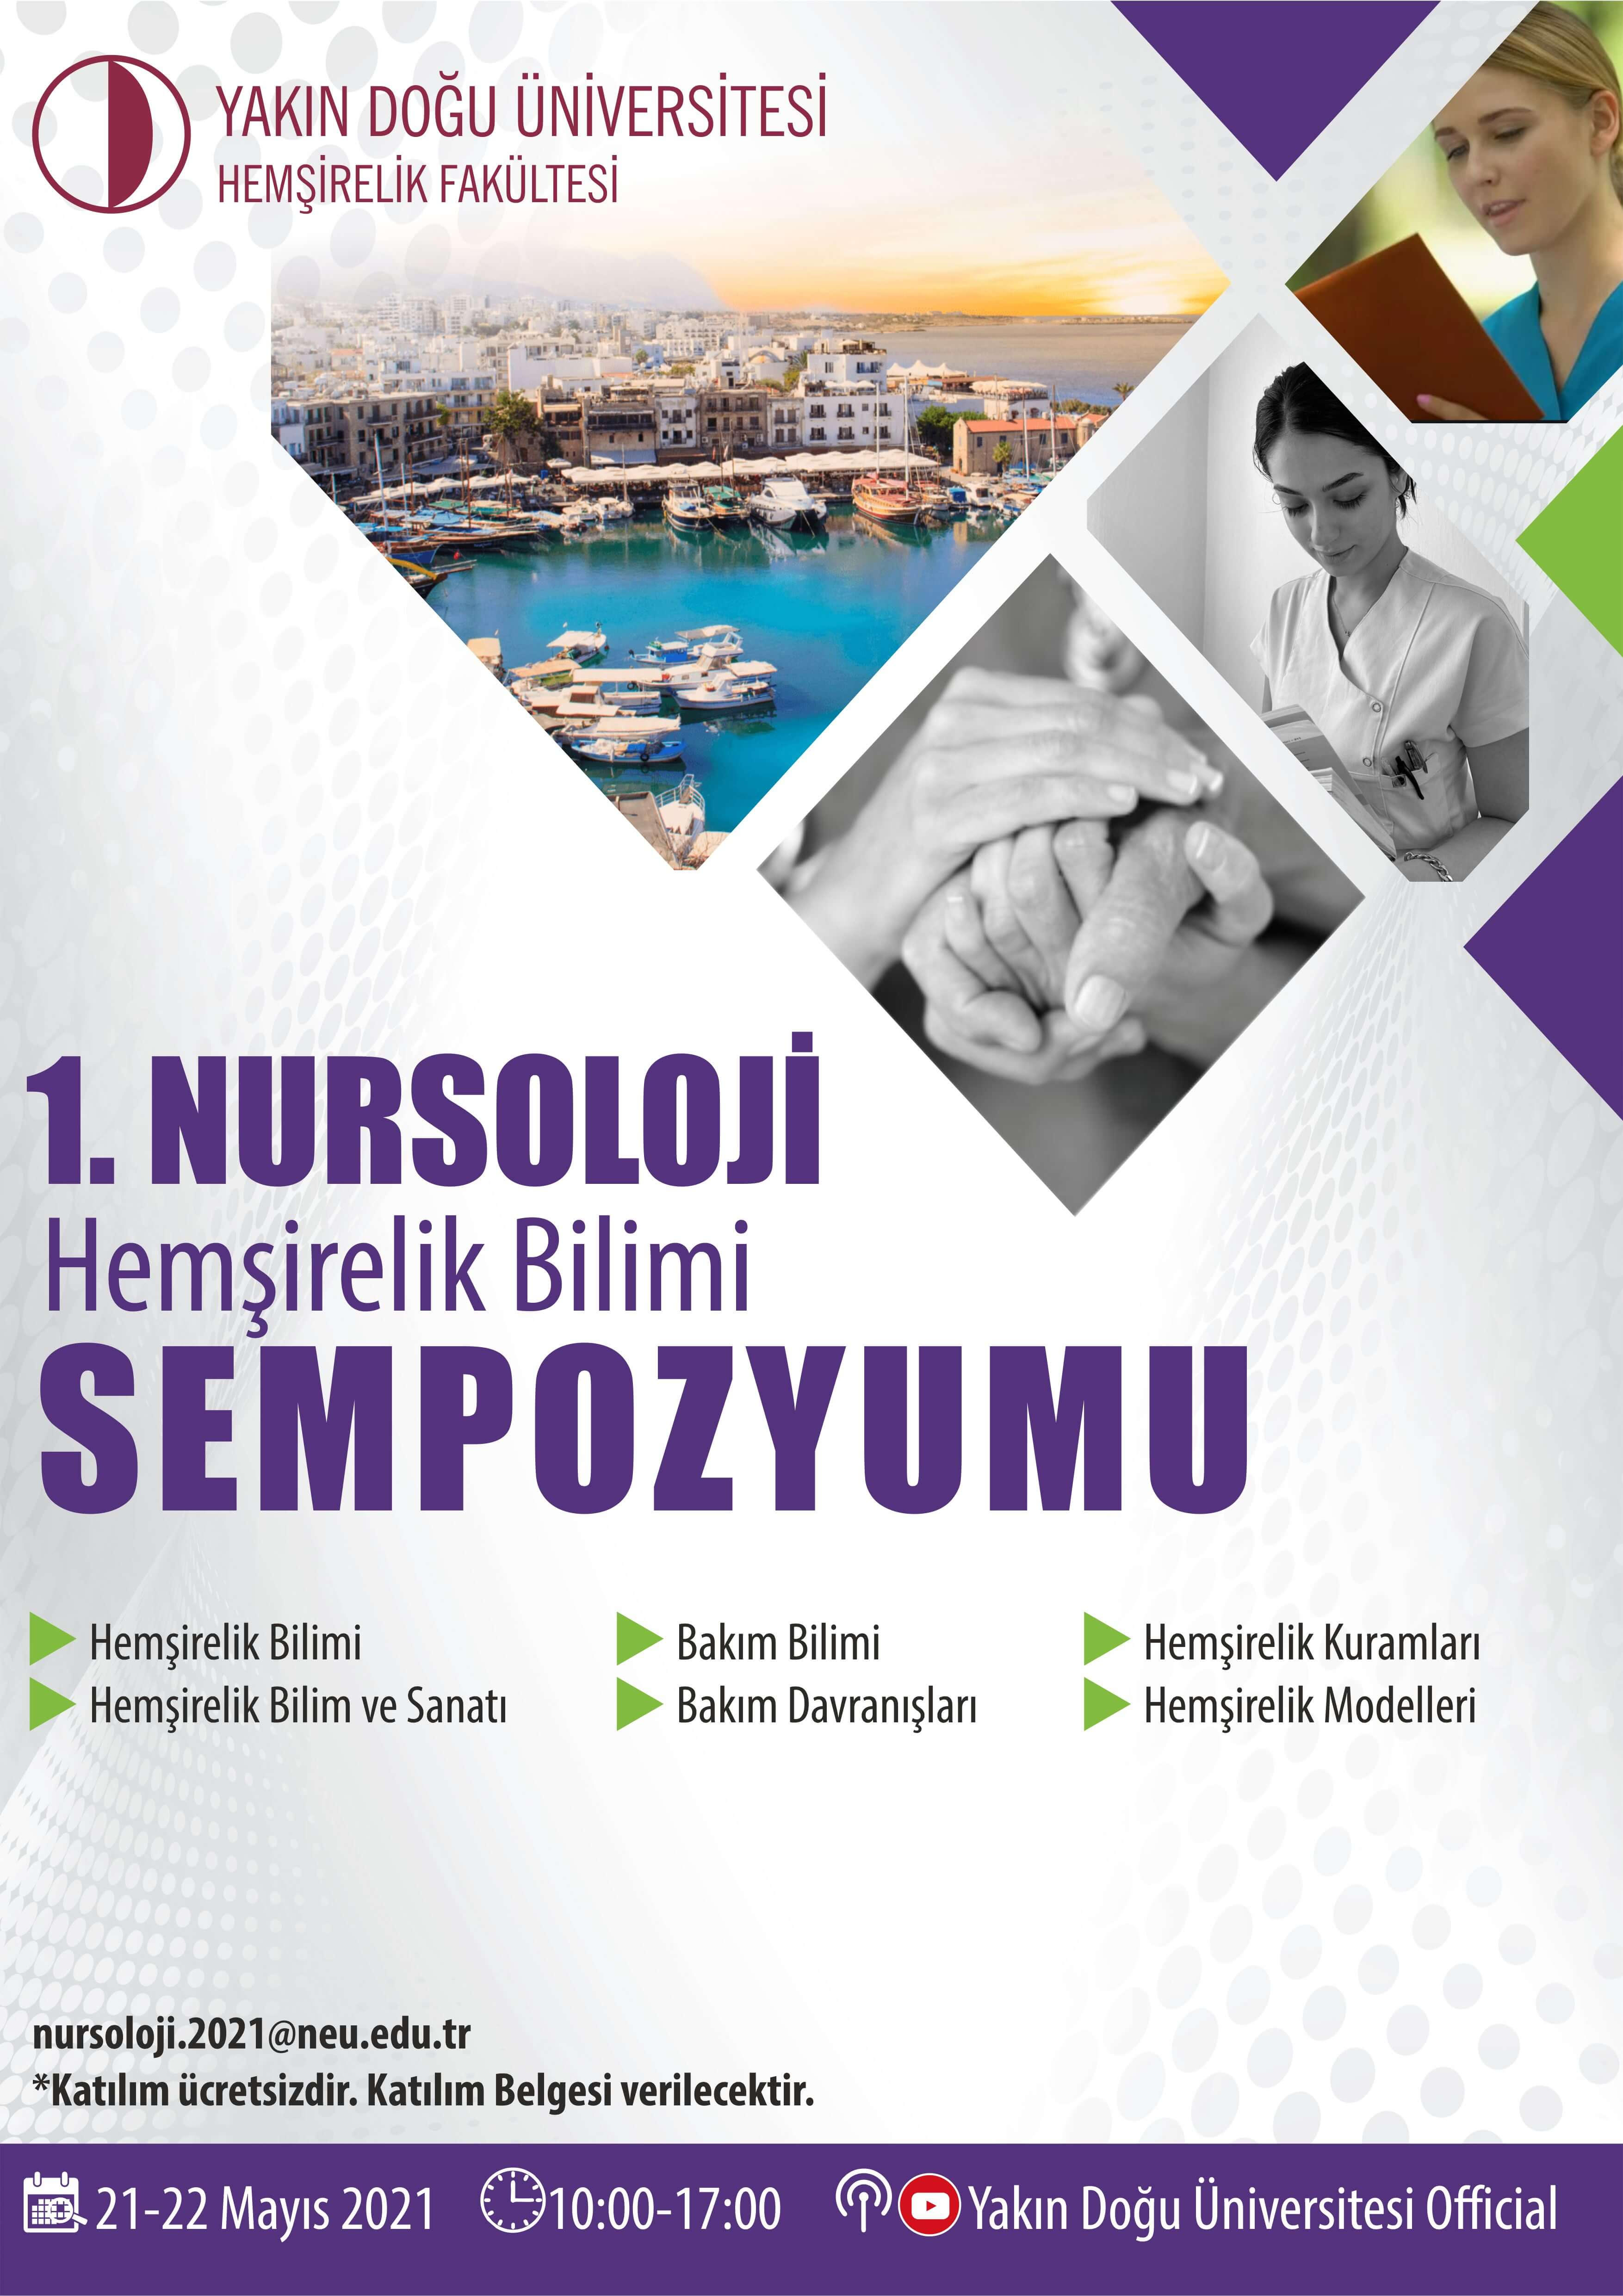 {mlang en}1st Nursology Nursing Science Symposium{mlang}{mlang tr}1. Nursoloji Hemşirelik Bilimi Sempozyumu{mlang}